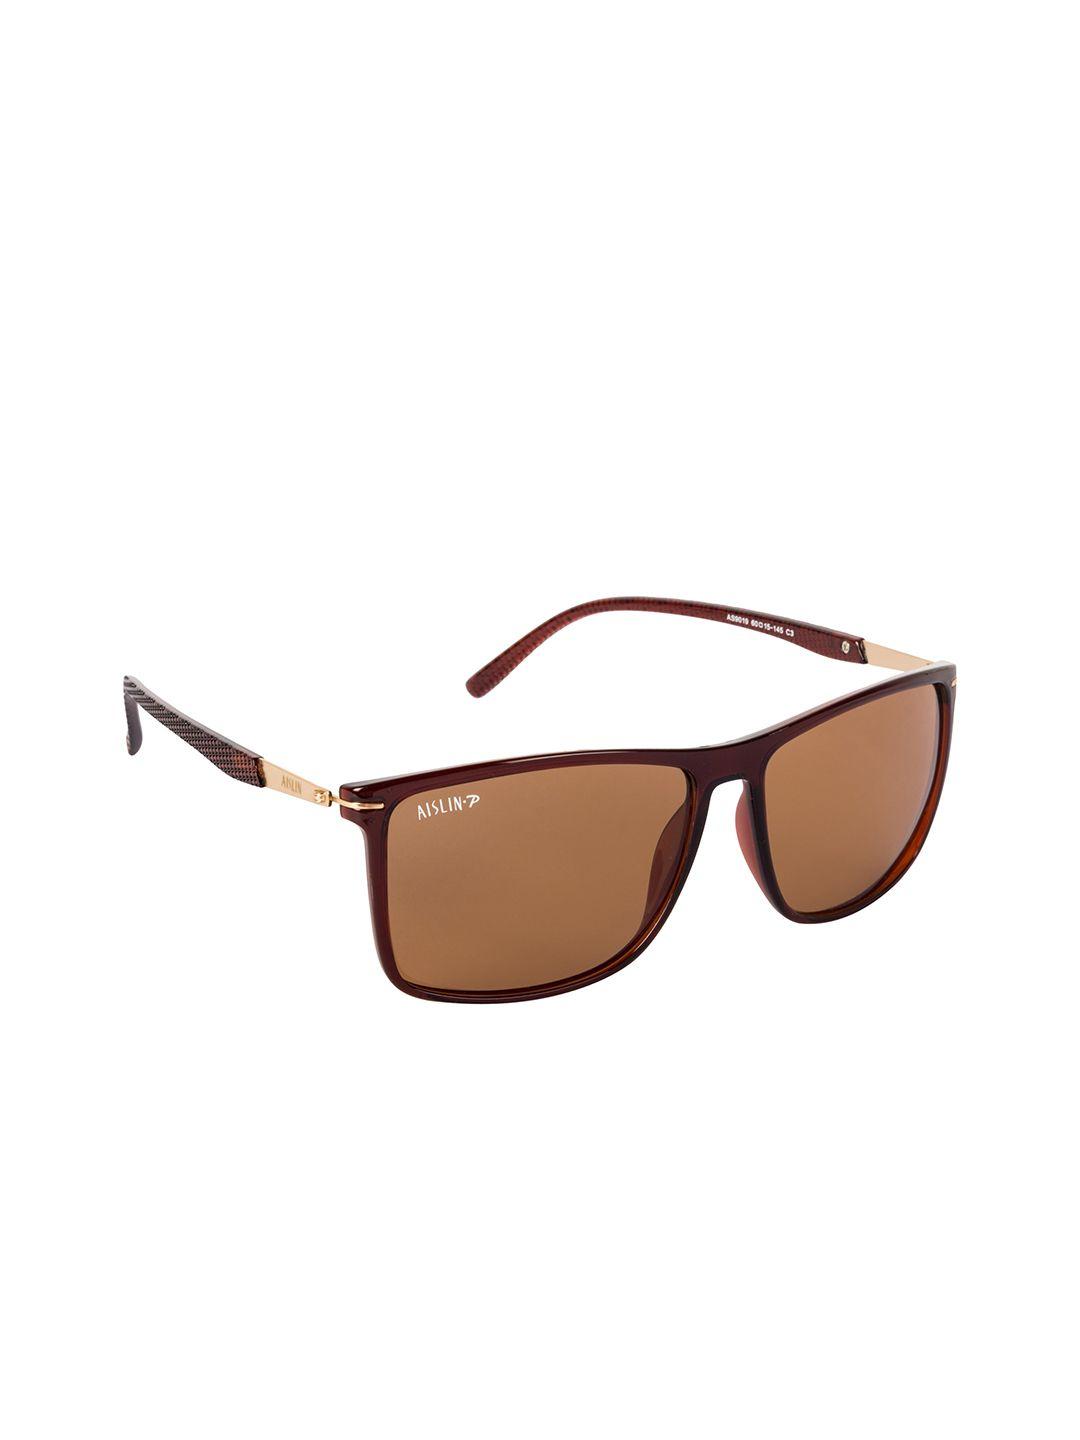 aislin unisex brown lens rectangle sunglasses uv protected lens 14202-53-as-9019